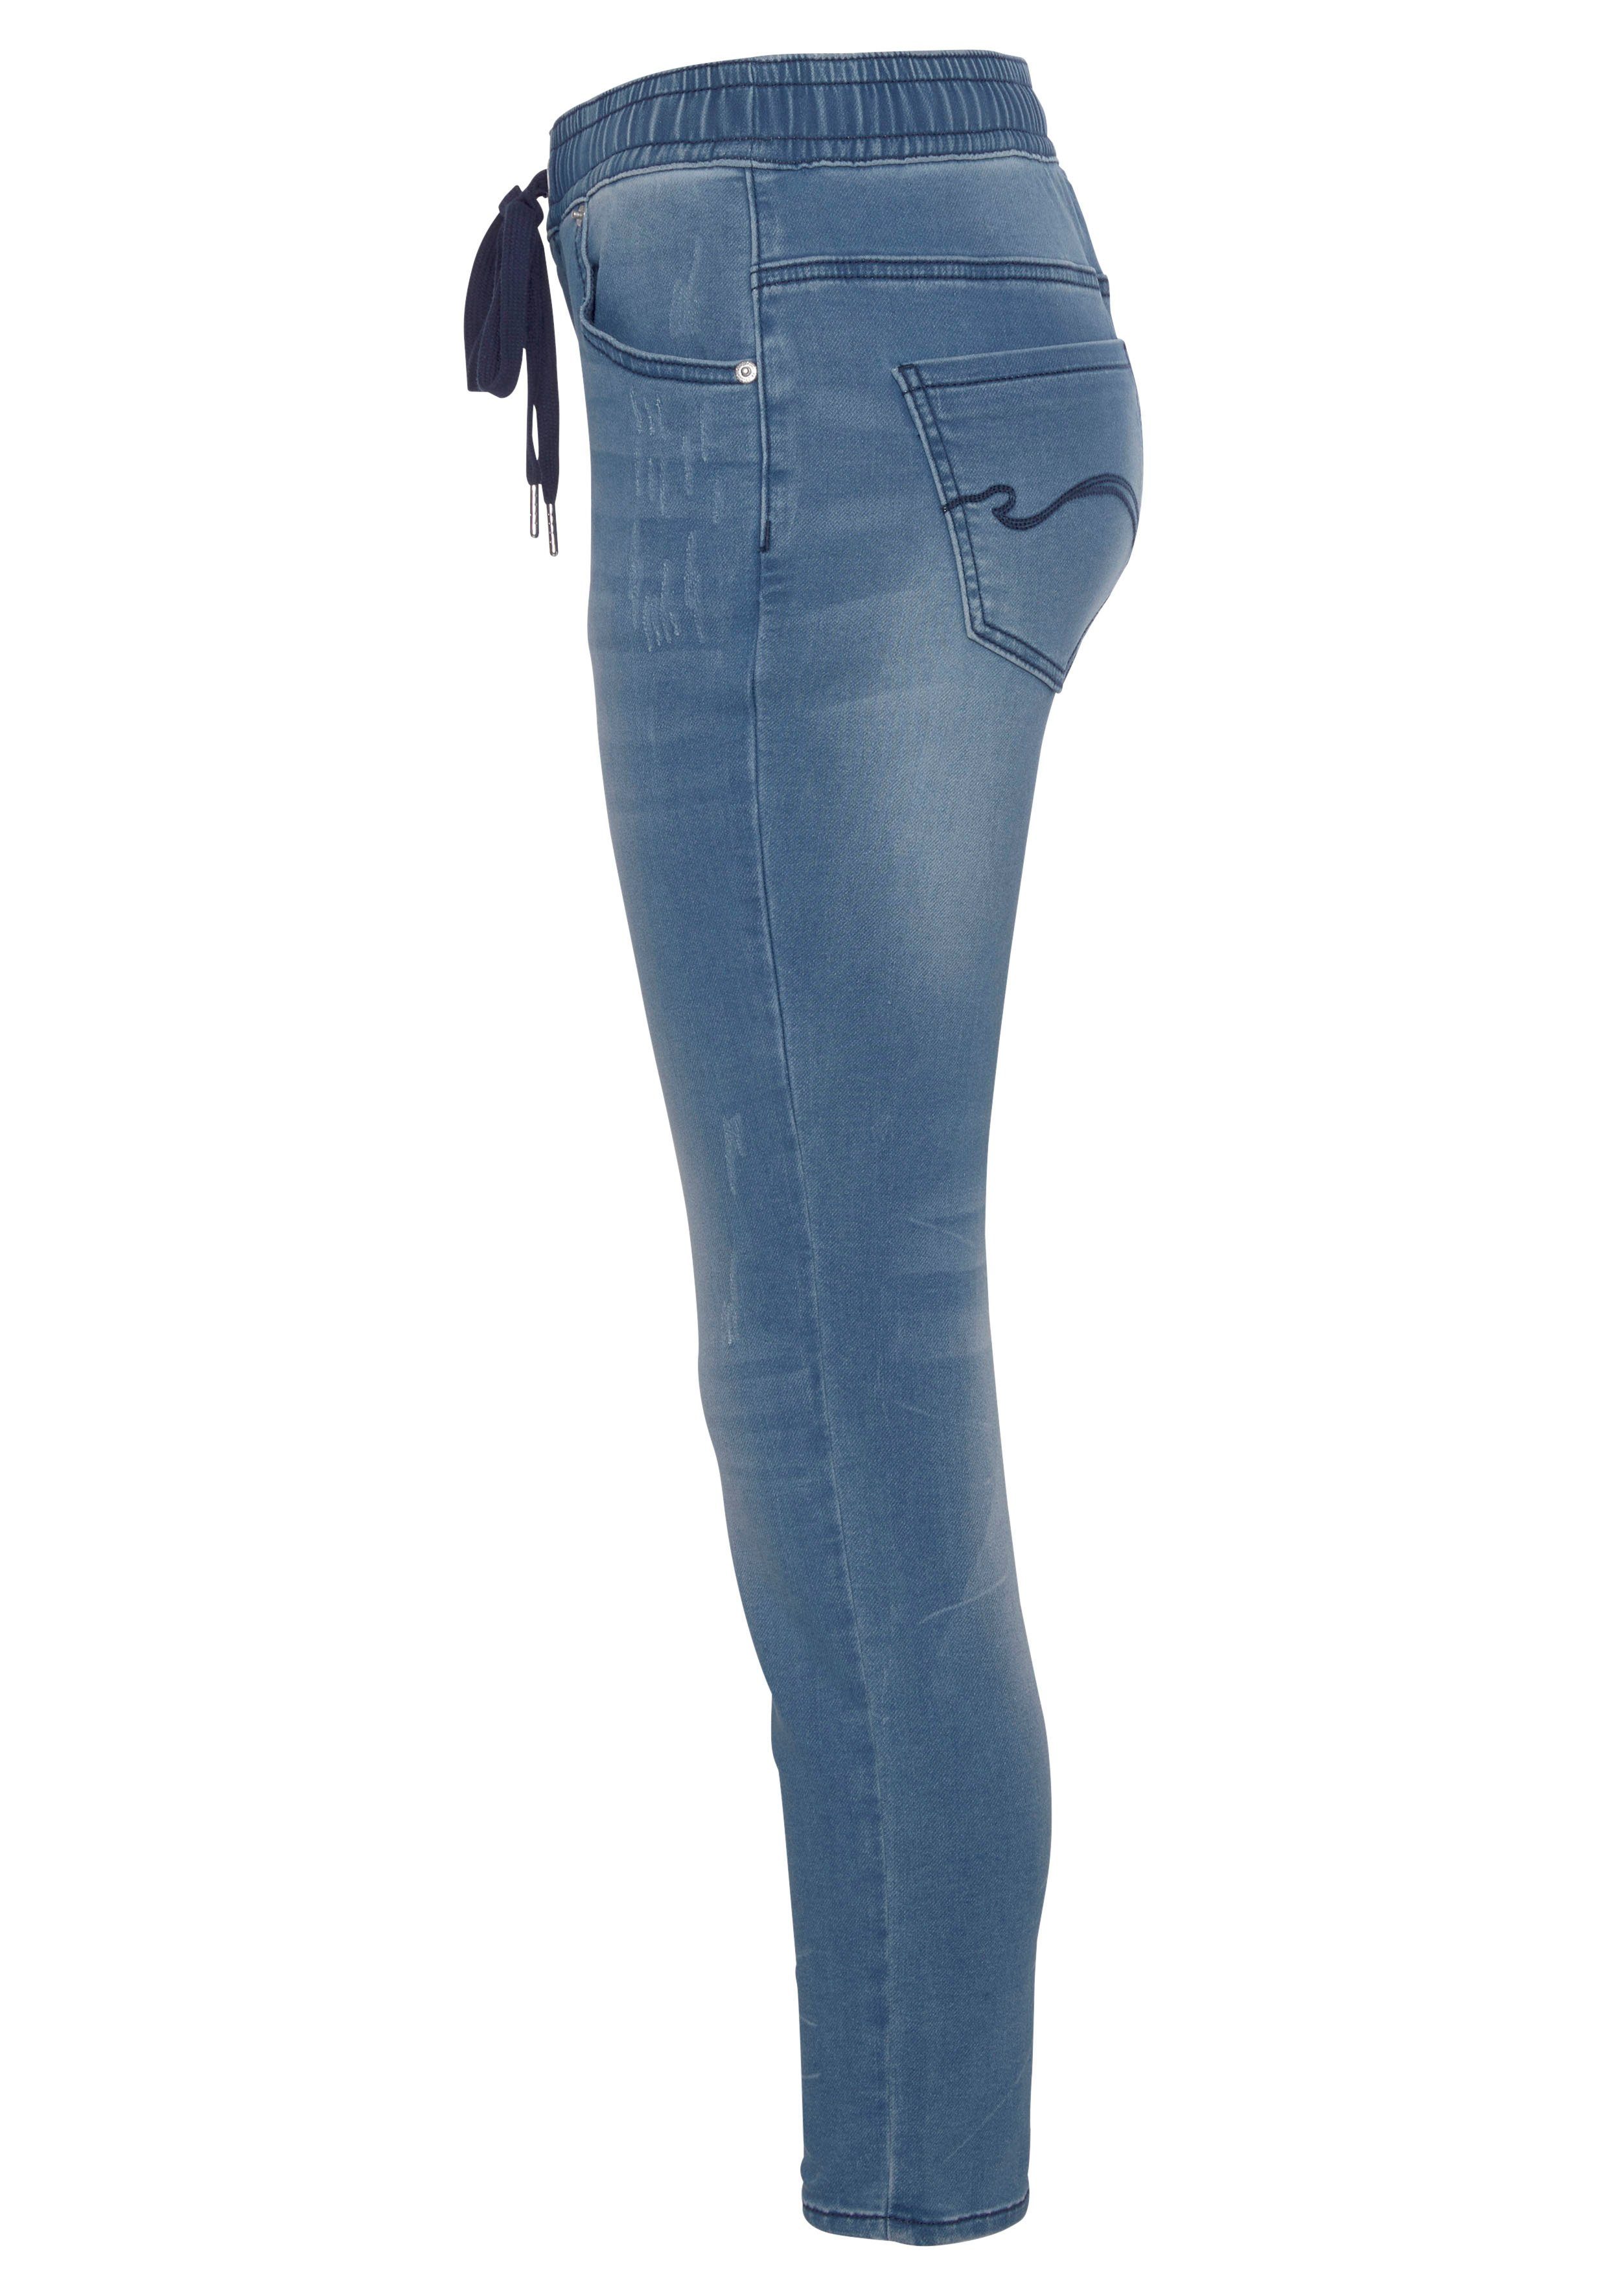 KangaROOS Jogg Pants 7/8 in elastischem new-mid-blue-used JOGG-DENIM Bündchen mit Denim-Optik